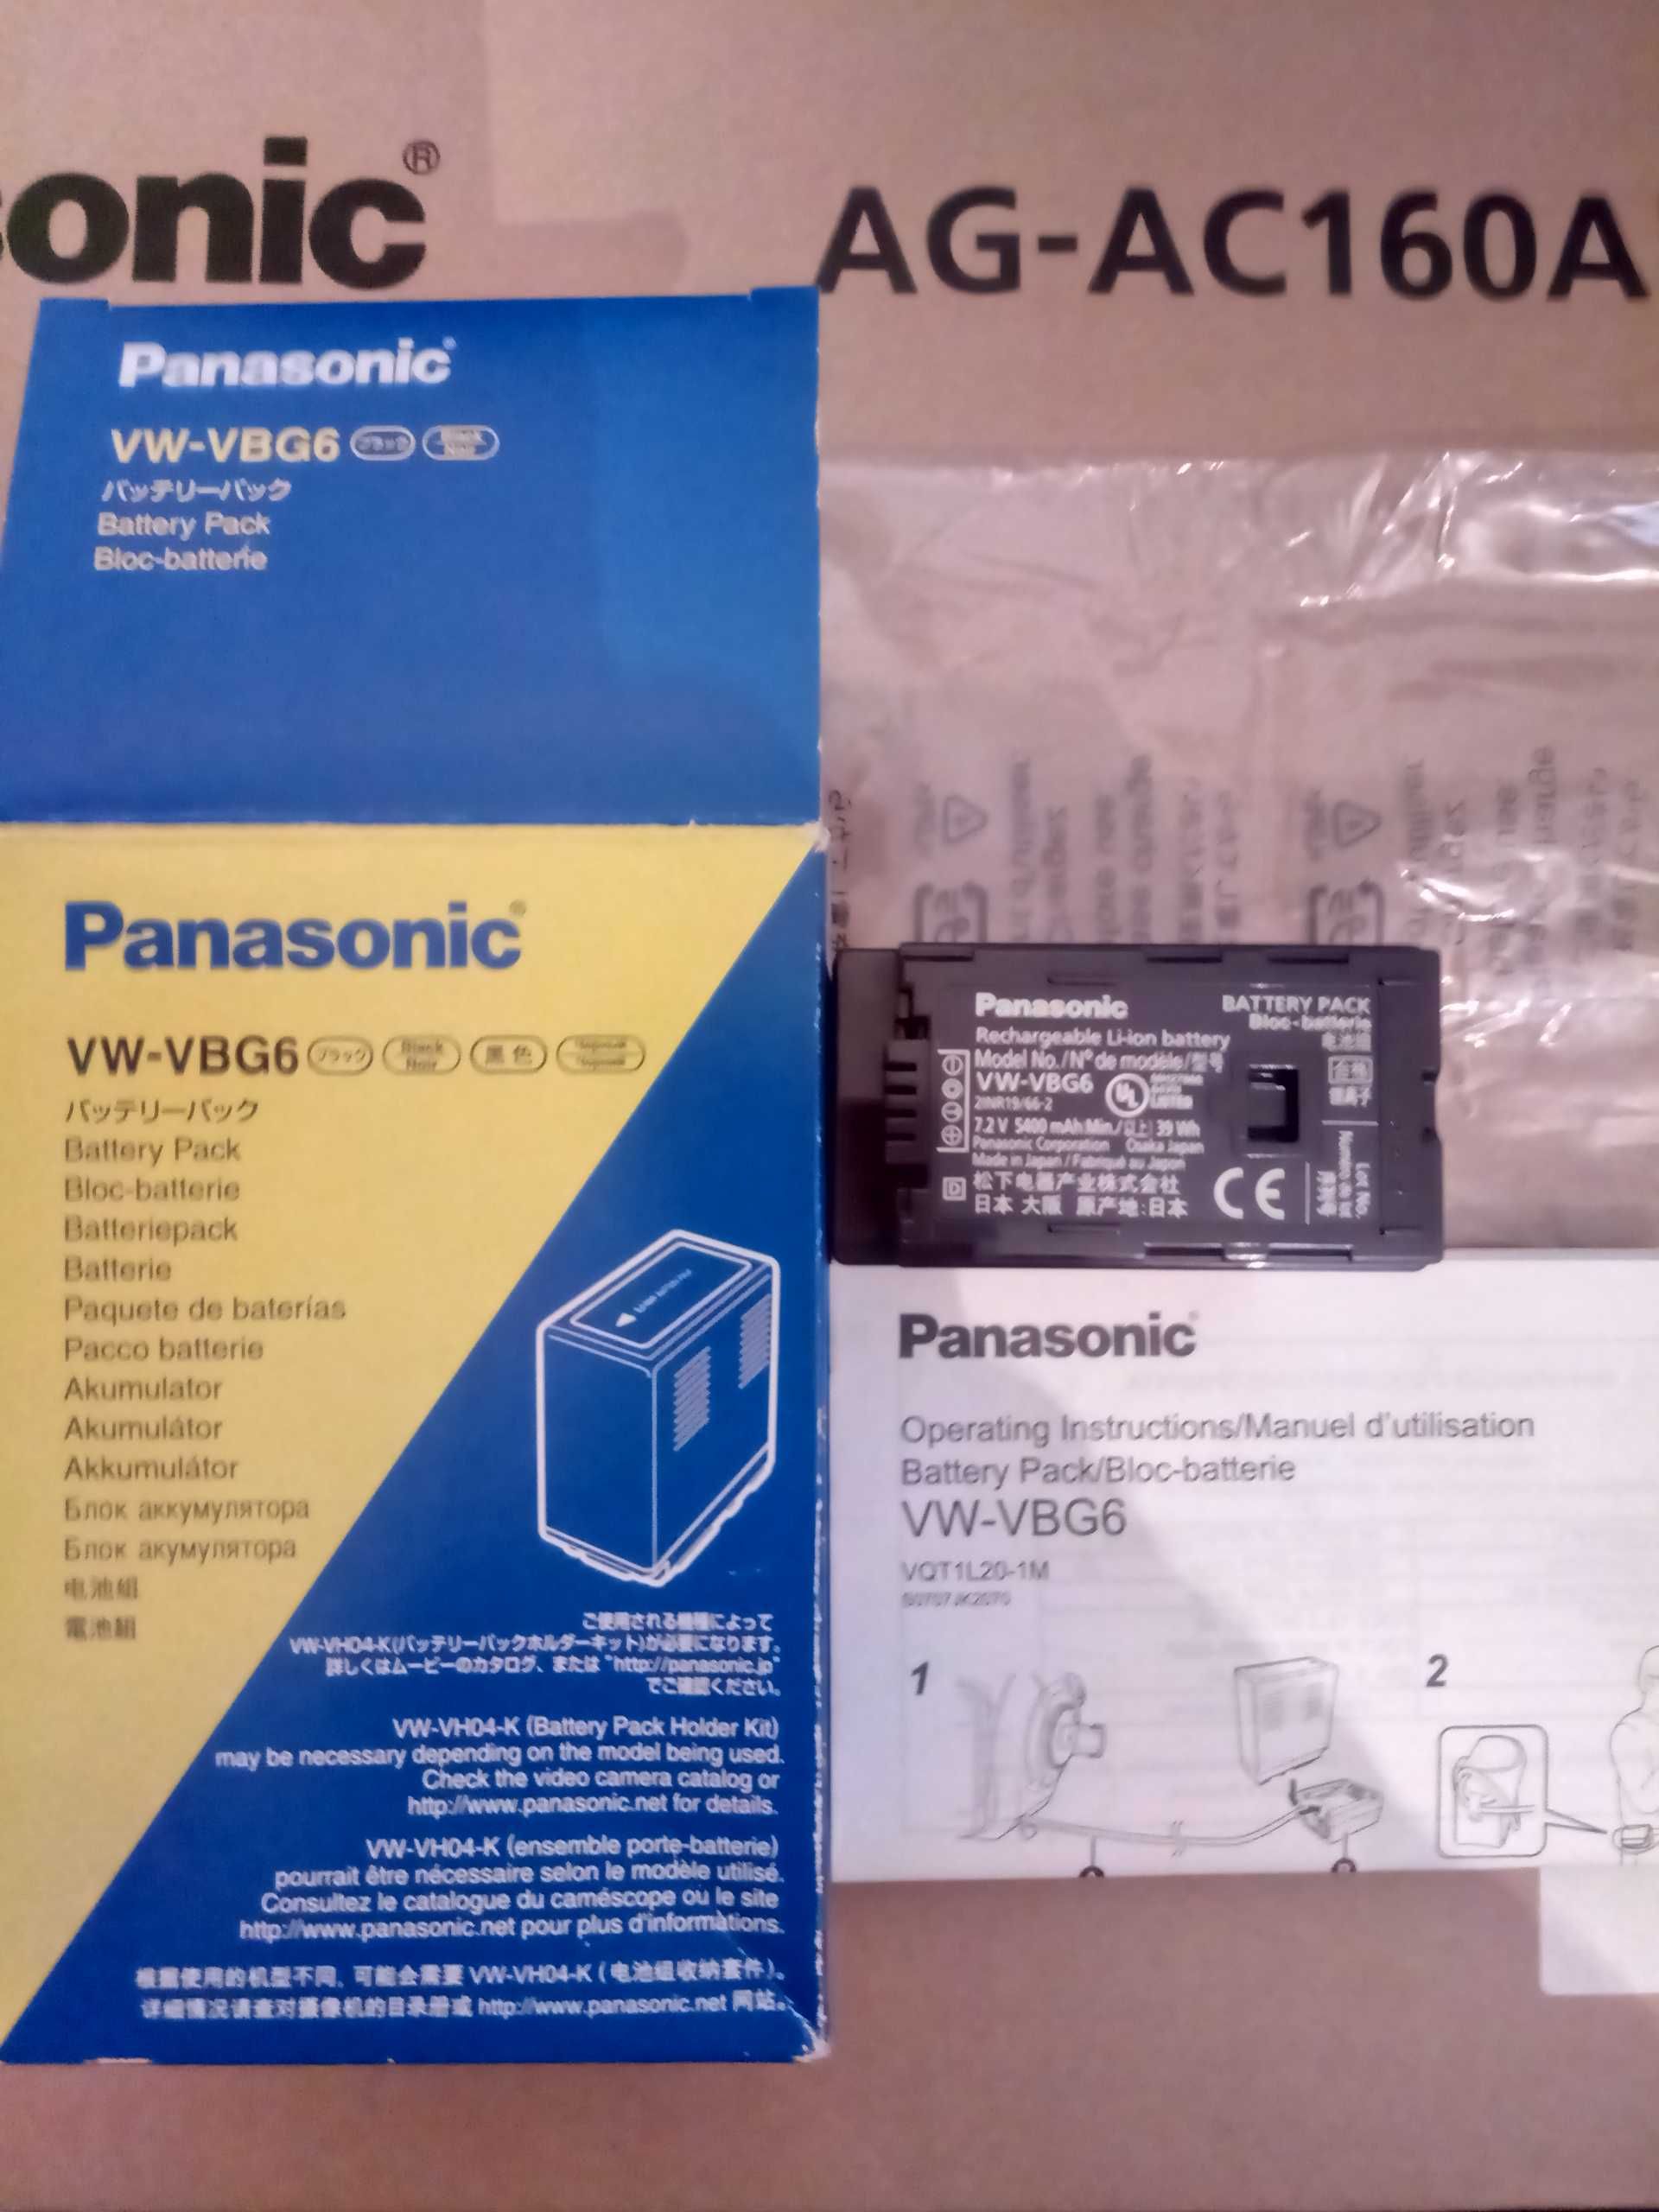 Для видеокамер фильтра Sony, Panasonic.Аккумуляторы Sony, Panasonic.